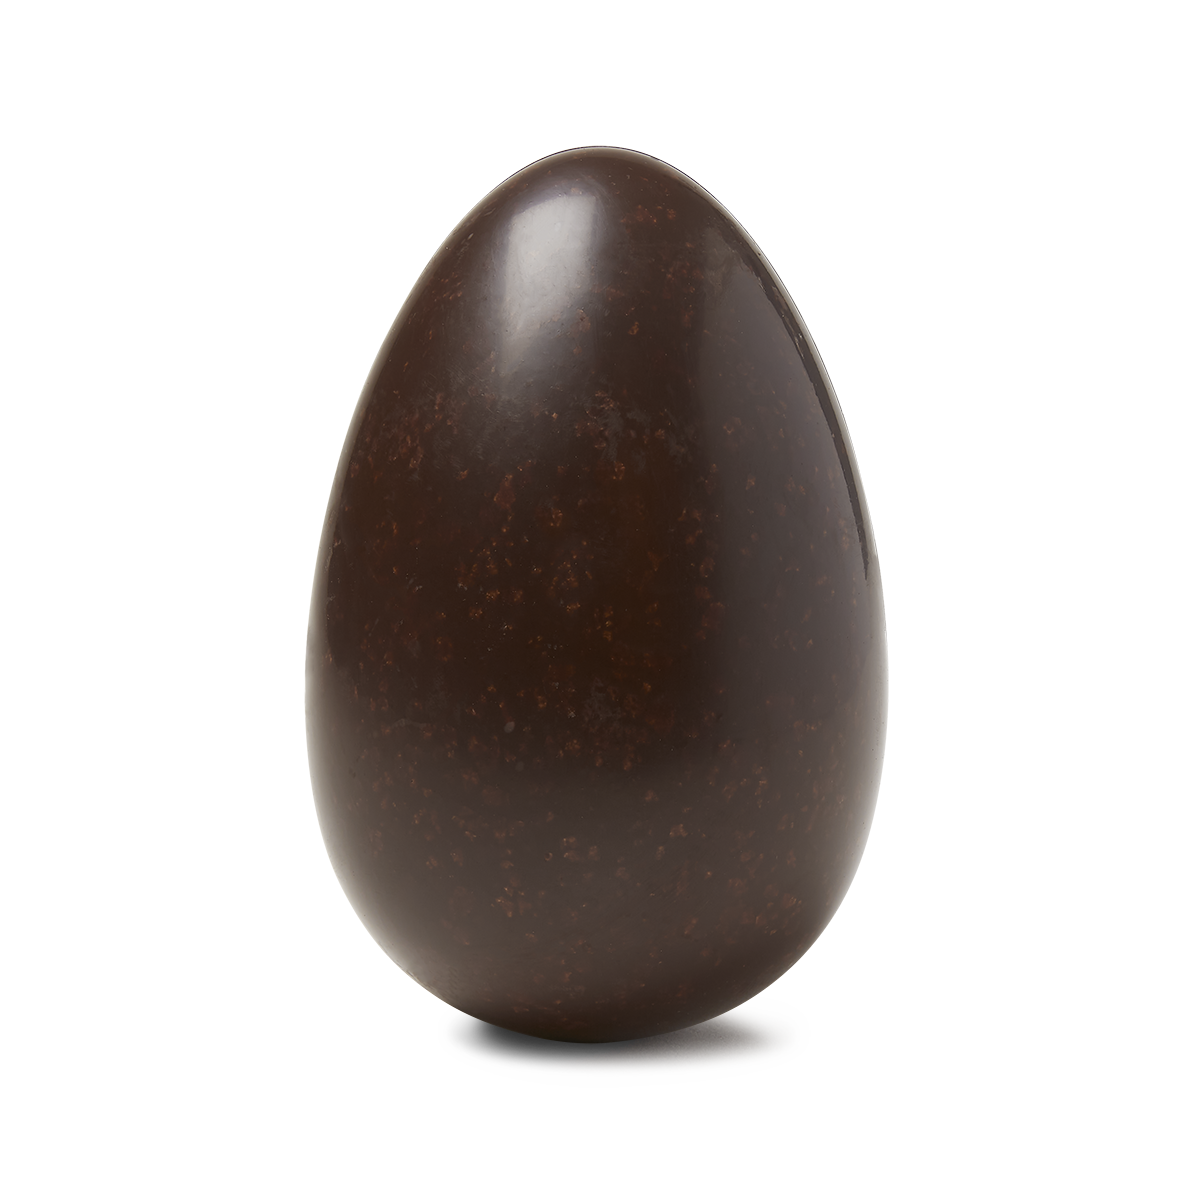 Sunny Passionfruit Egg | 54% Dark Chocolate